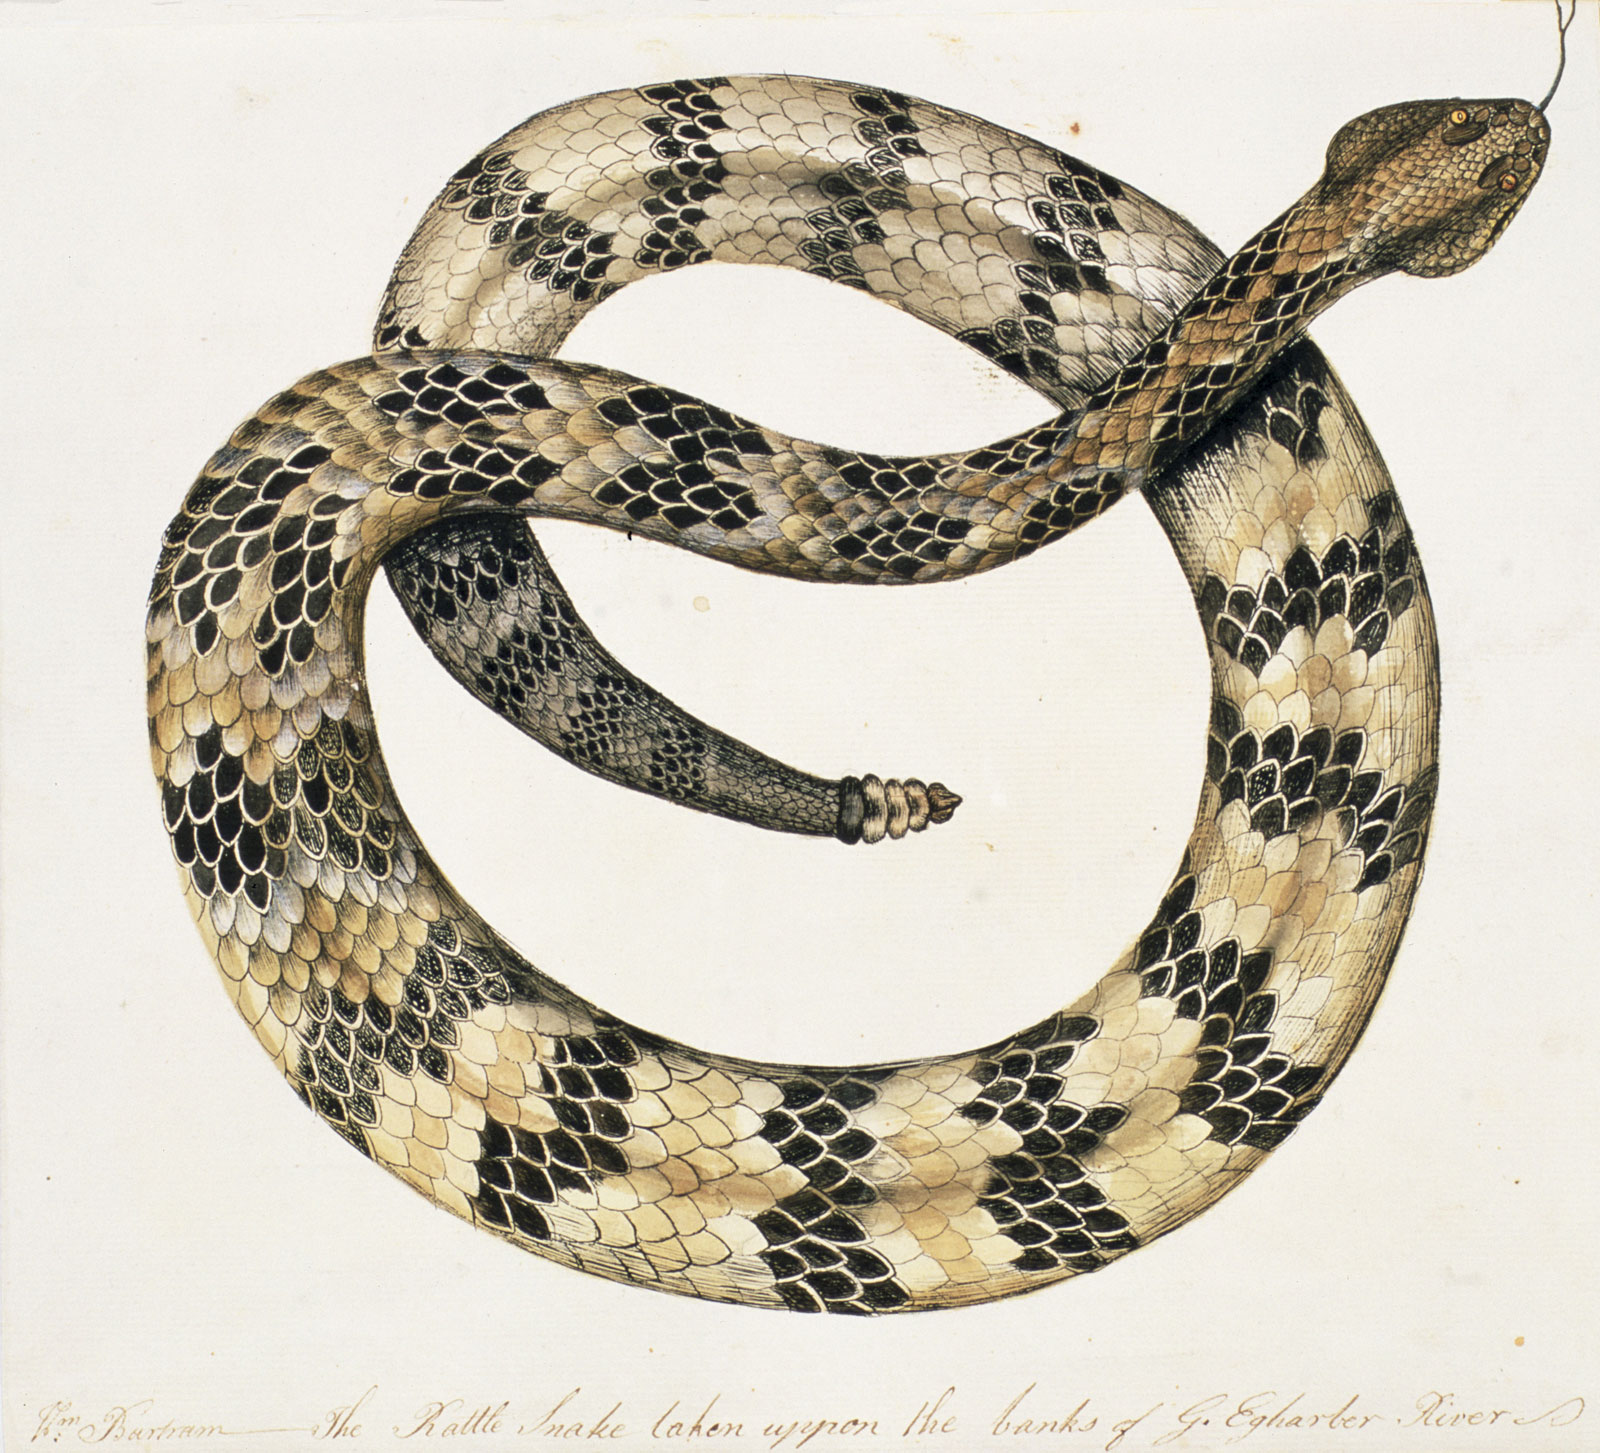 William Bartram: The Rattle Snake, late eighteenth century 